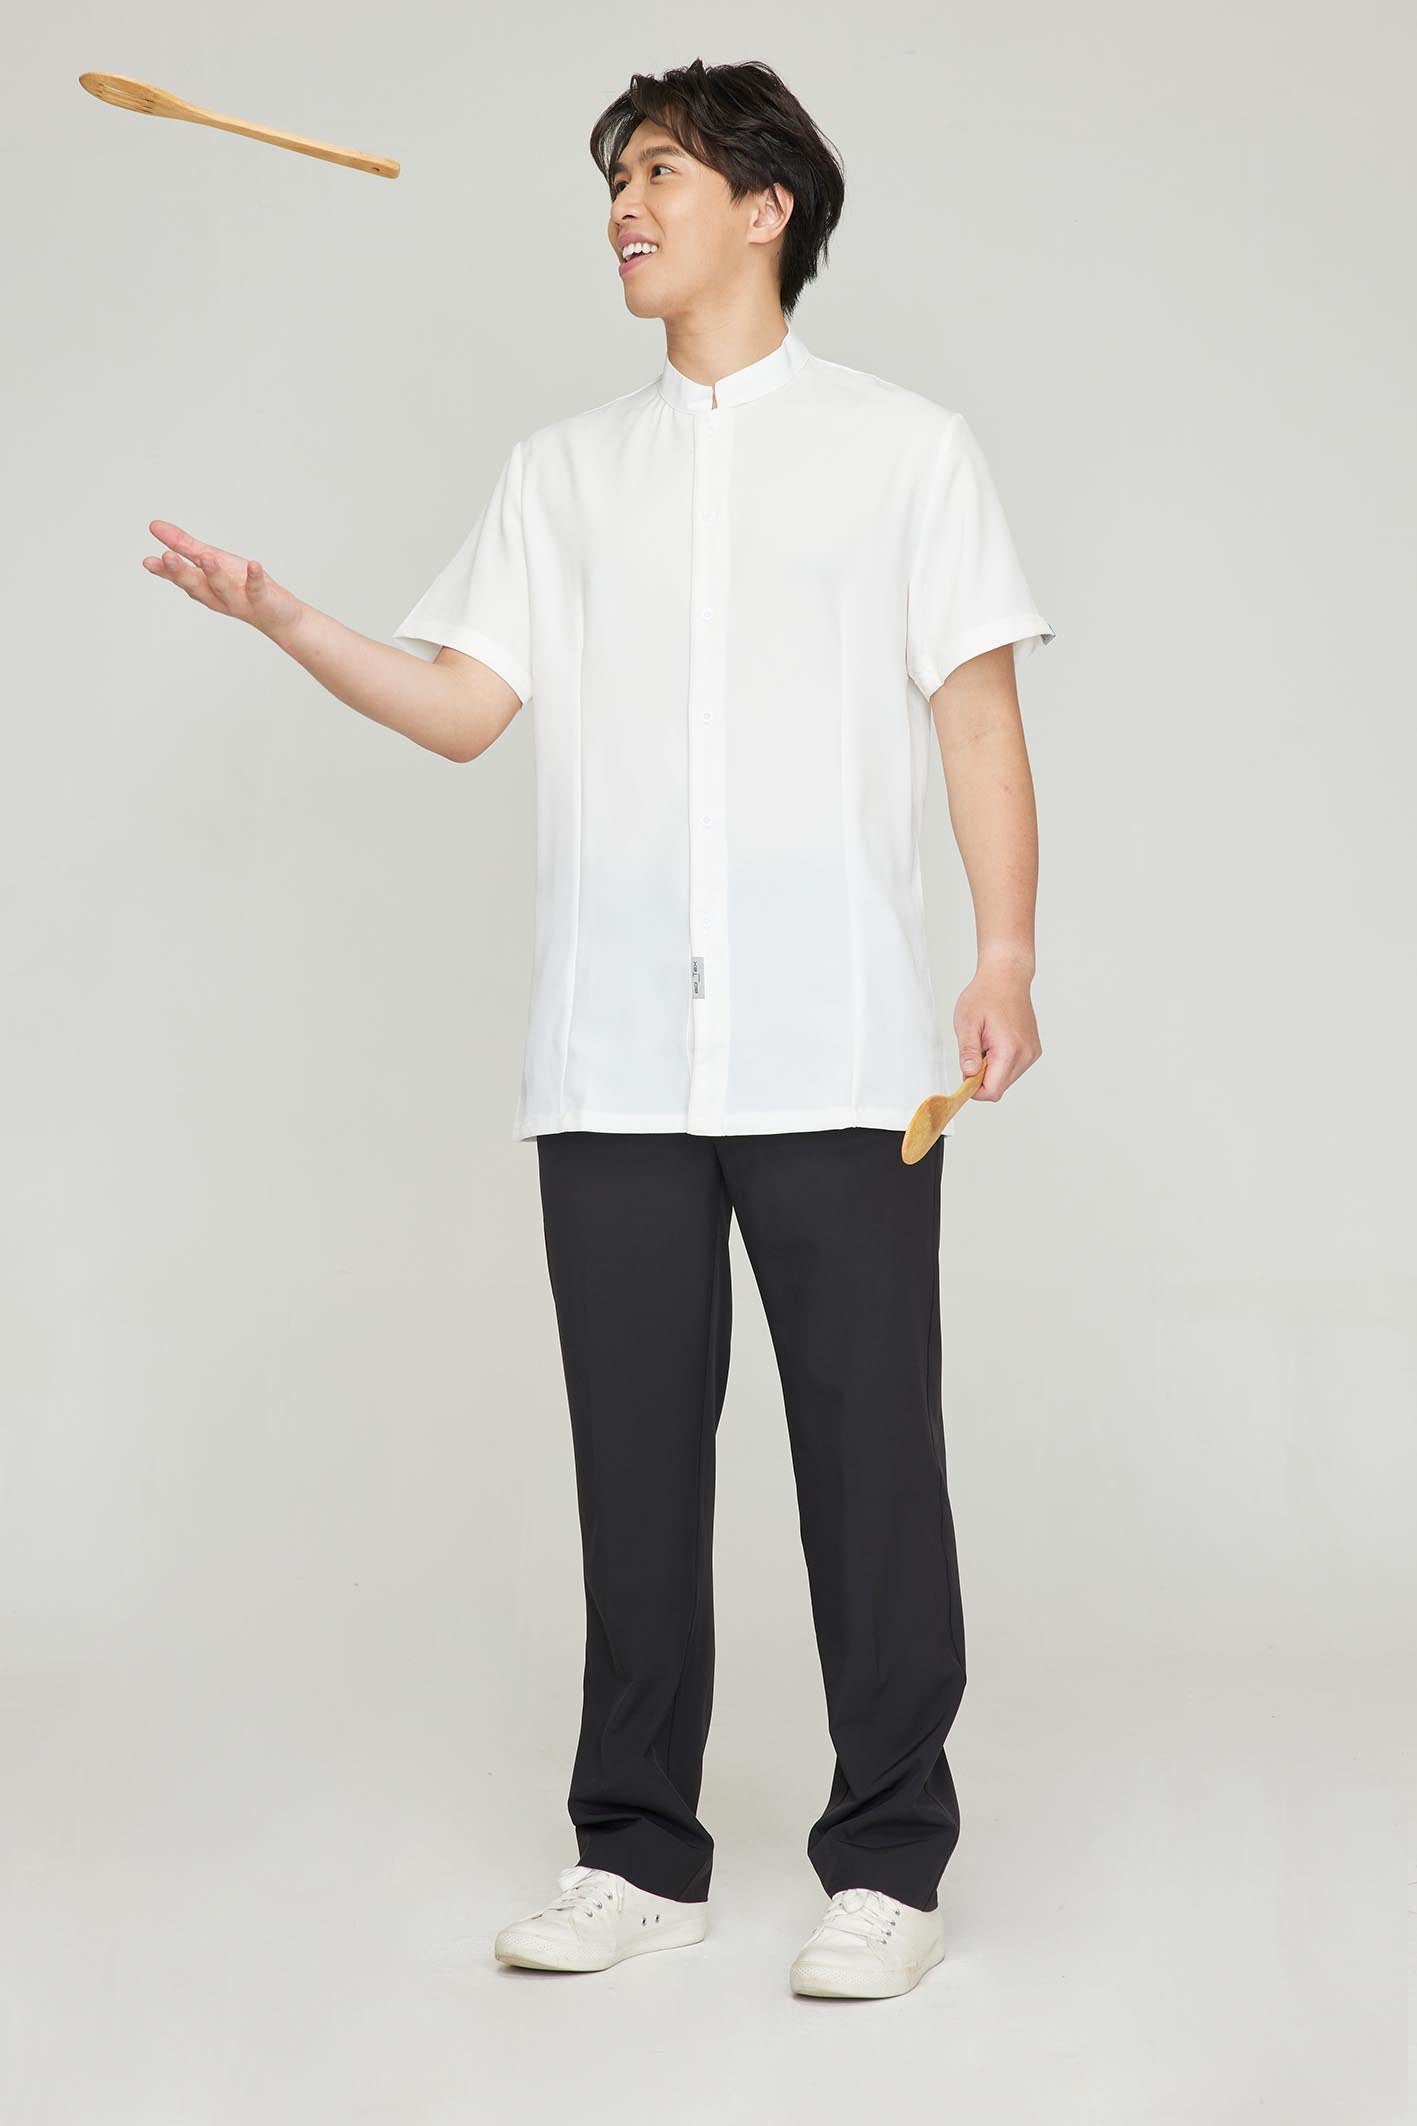 Men's BioNTex™ Short Sleeve Serve Shirt